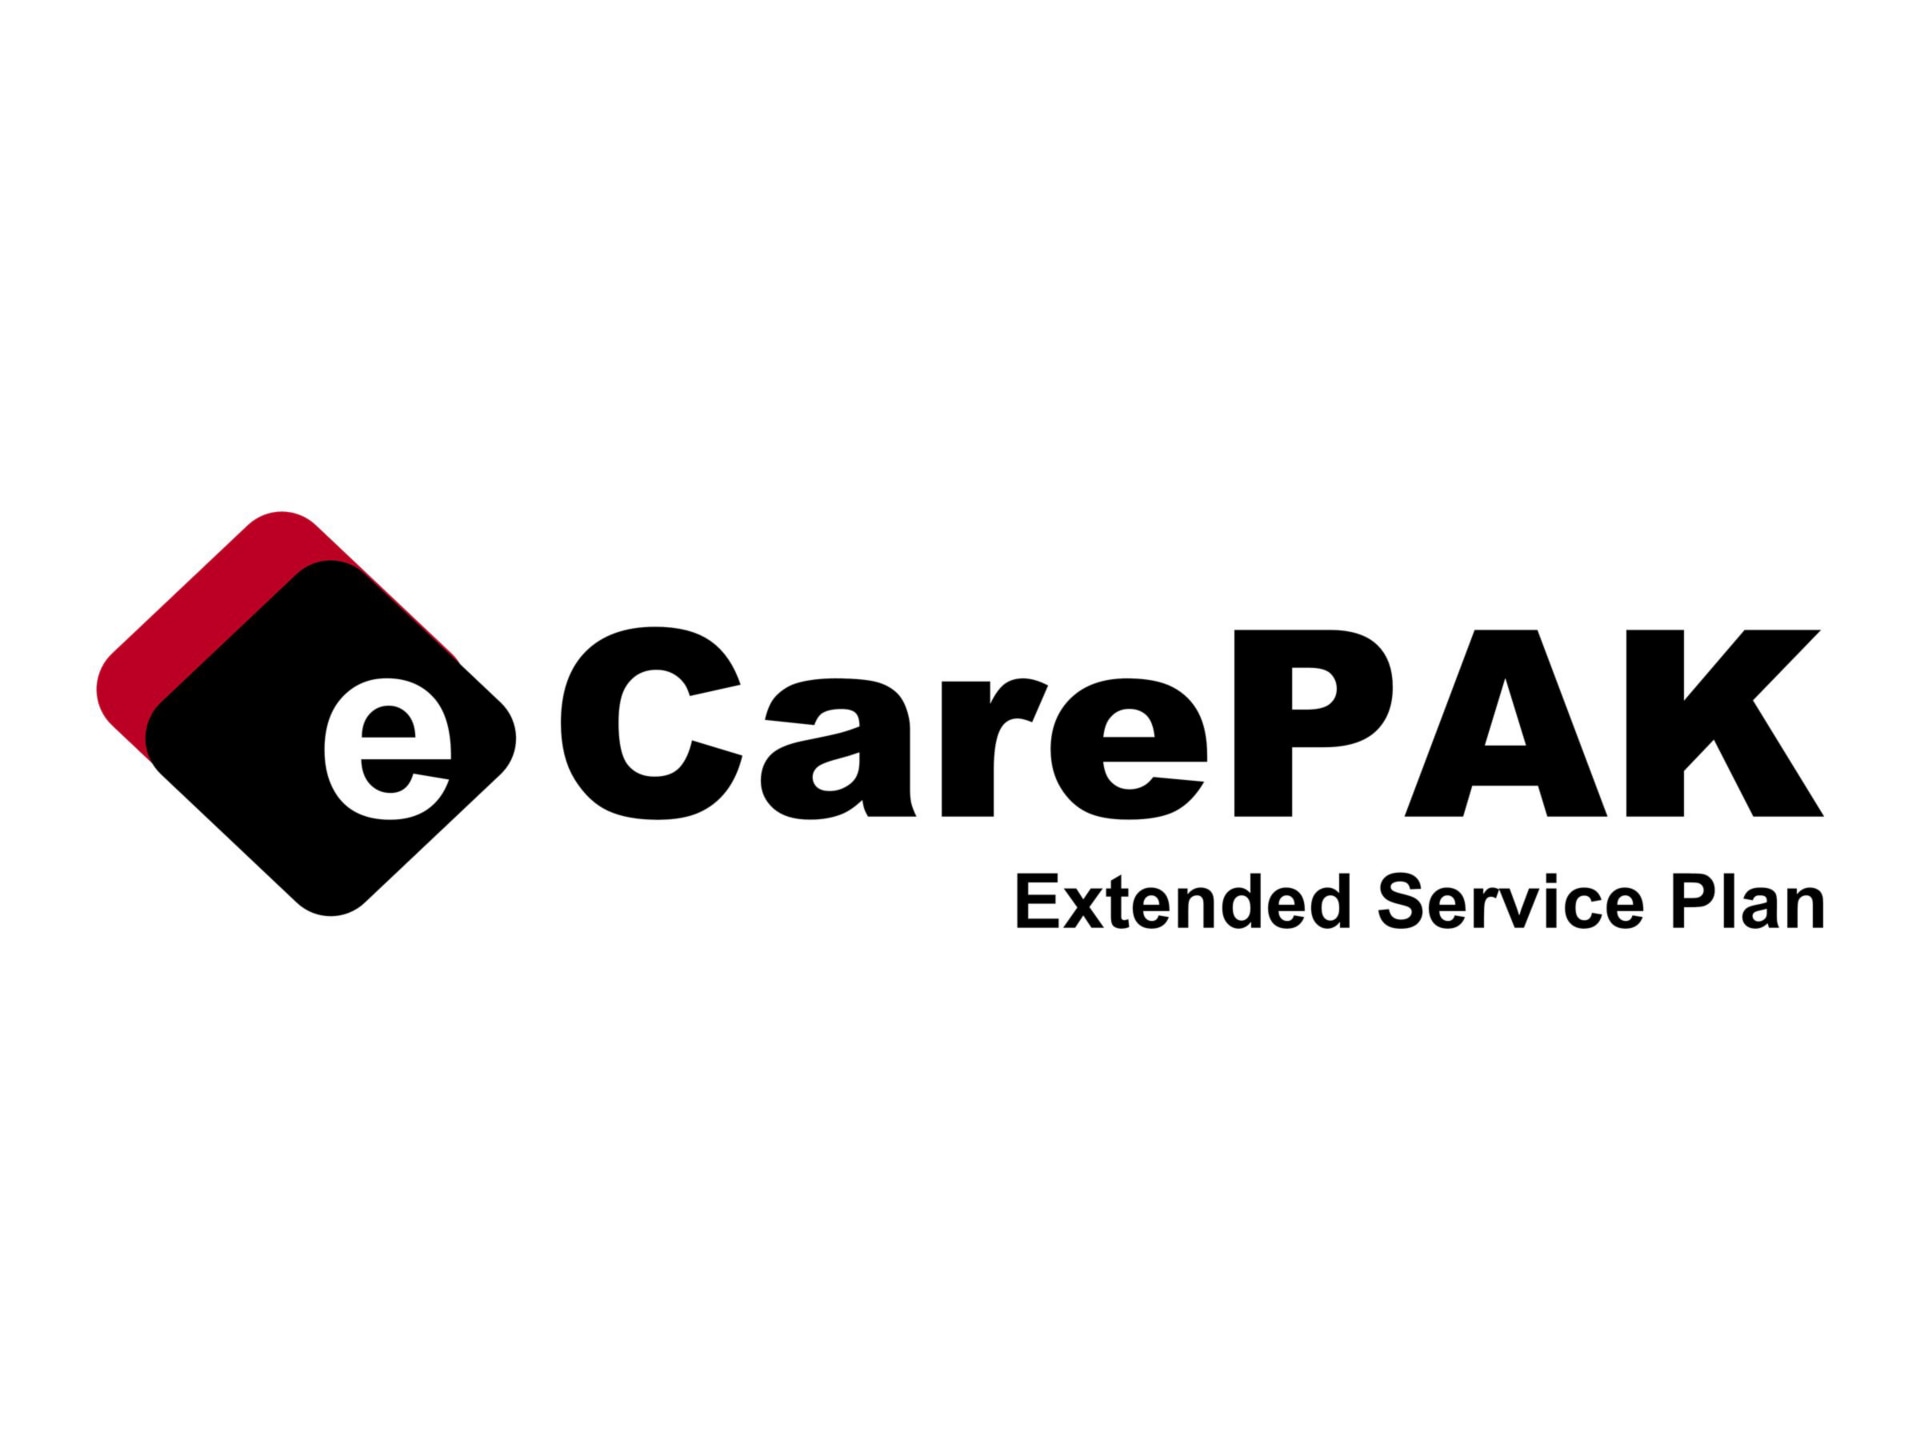 Canon eCarePAK Extended Service Plan On-Site Service Program - extended service agreement - 1 year - on-site